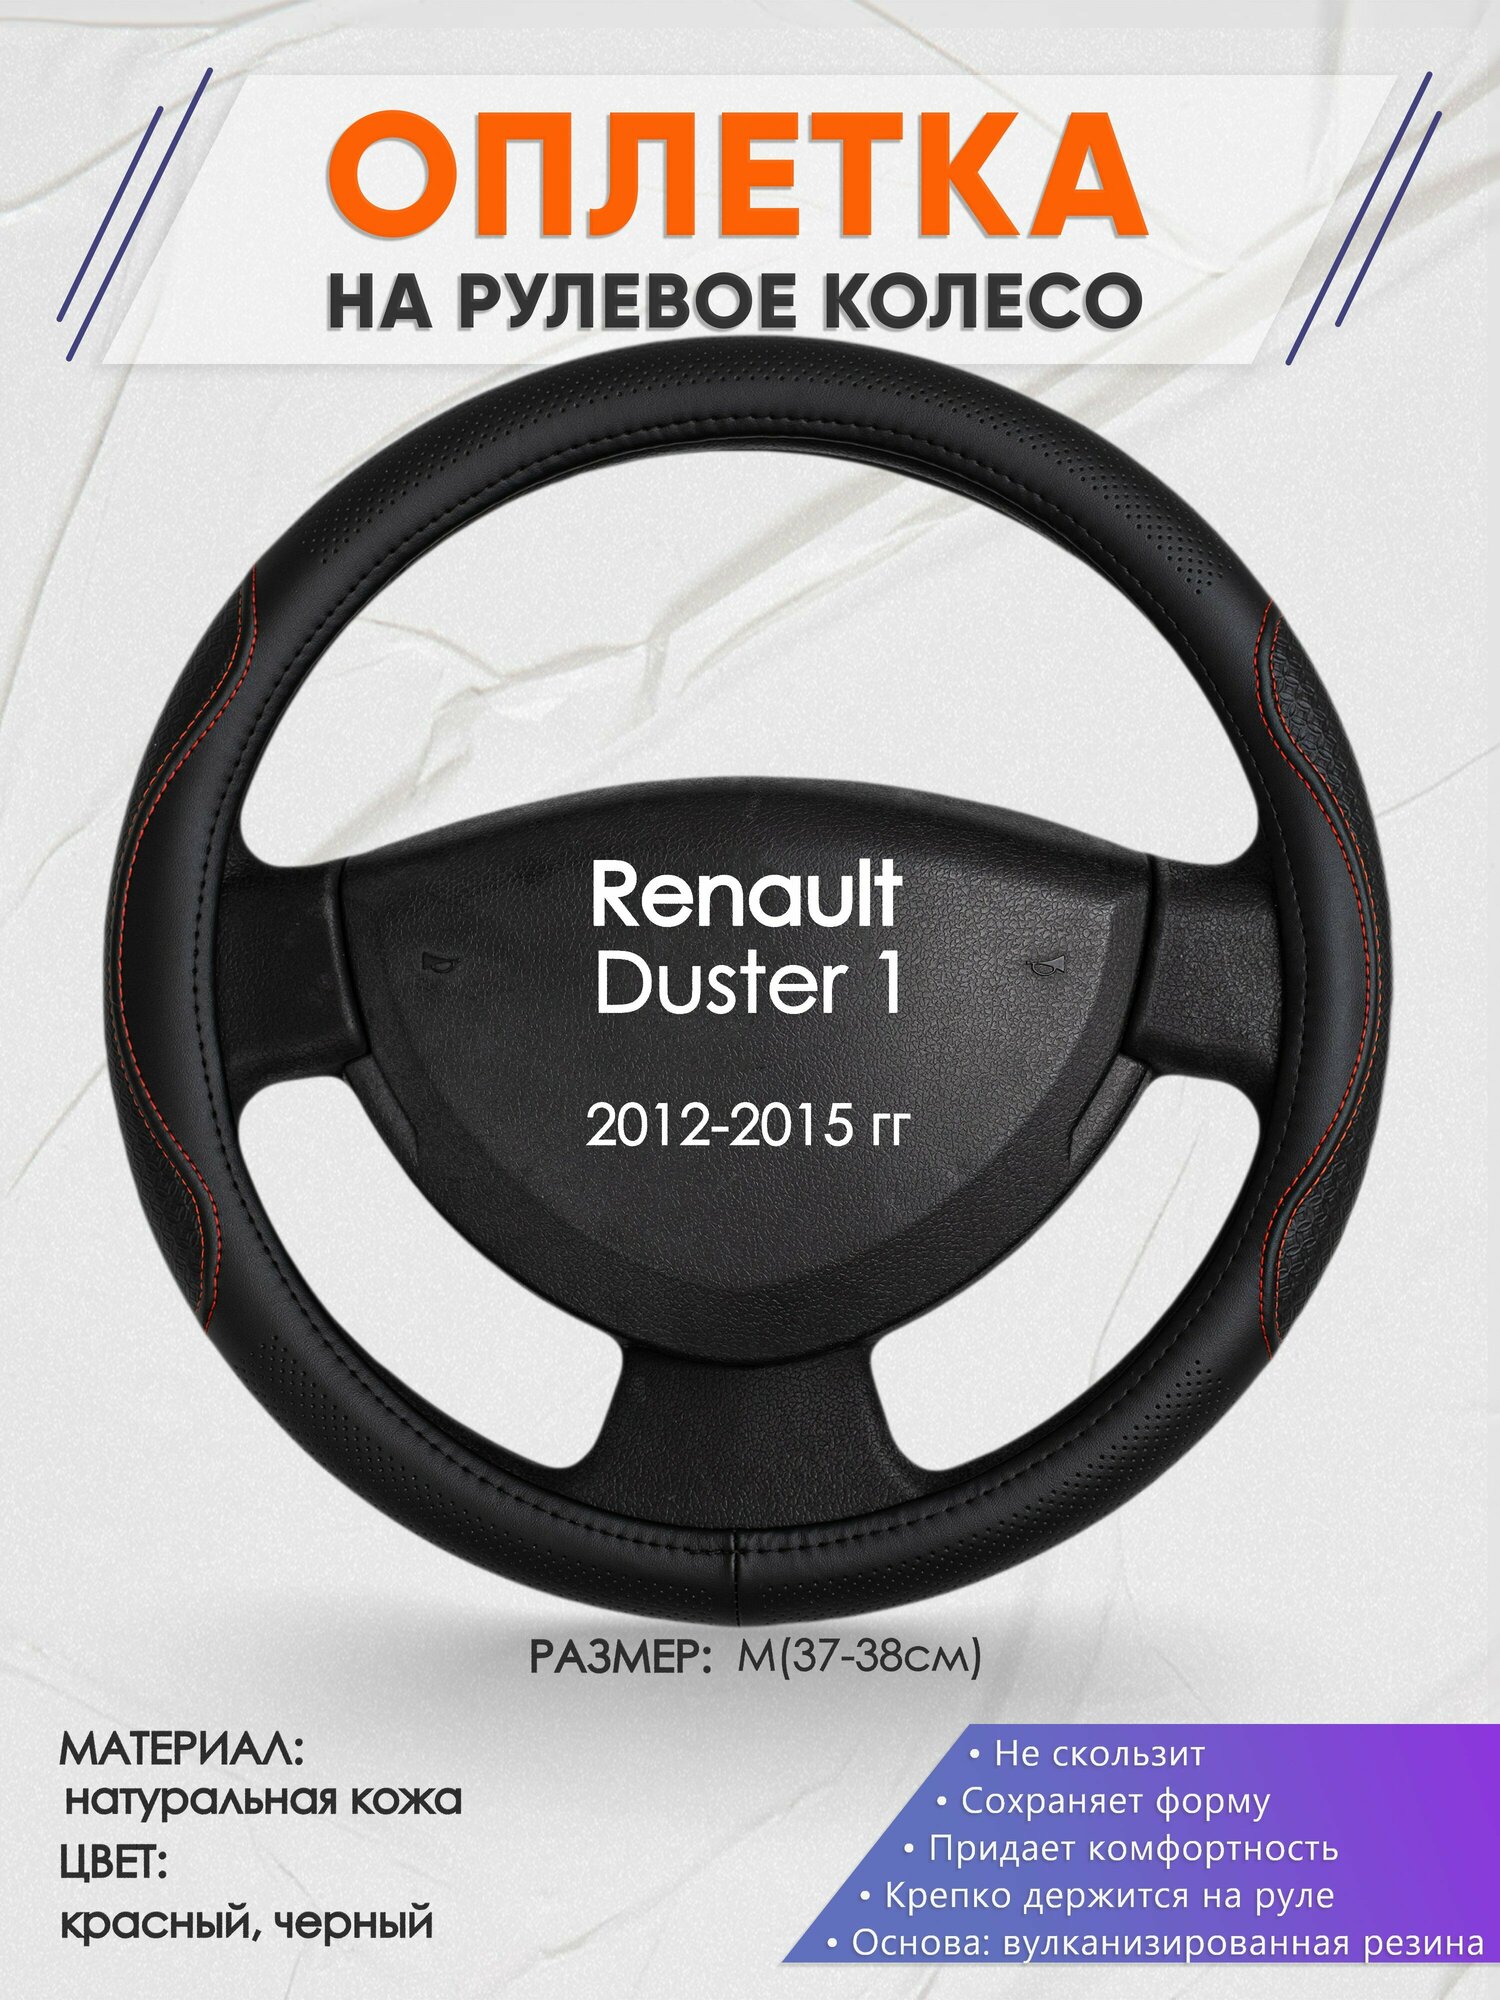 Оплетка на руль для Renault Duster 1(Рено Дастер 1) 2012-2015 M(37-38см) Натуральная кожа 89